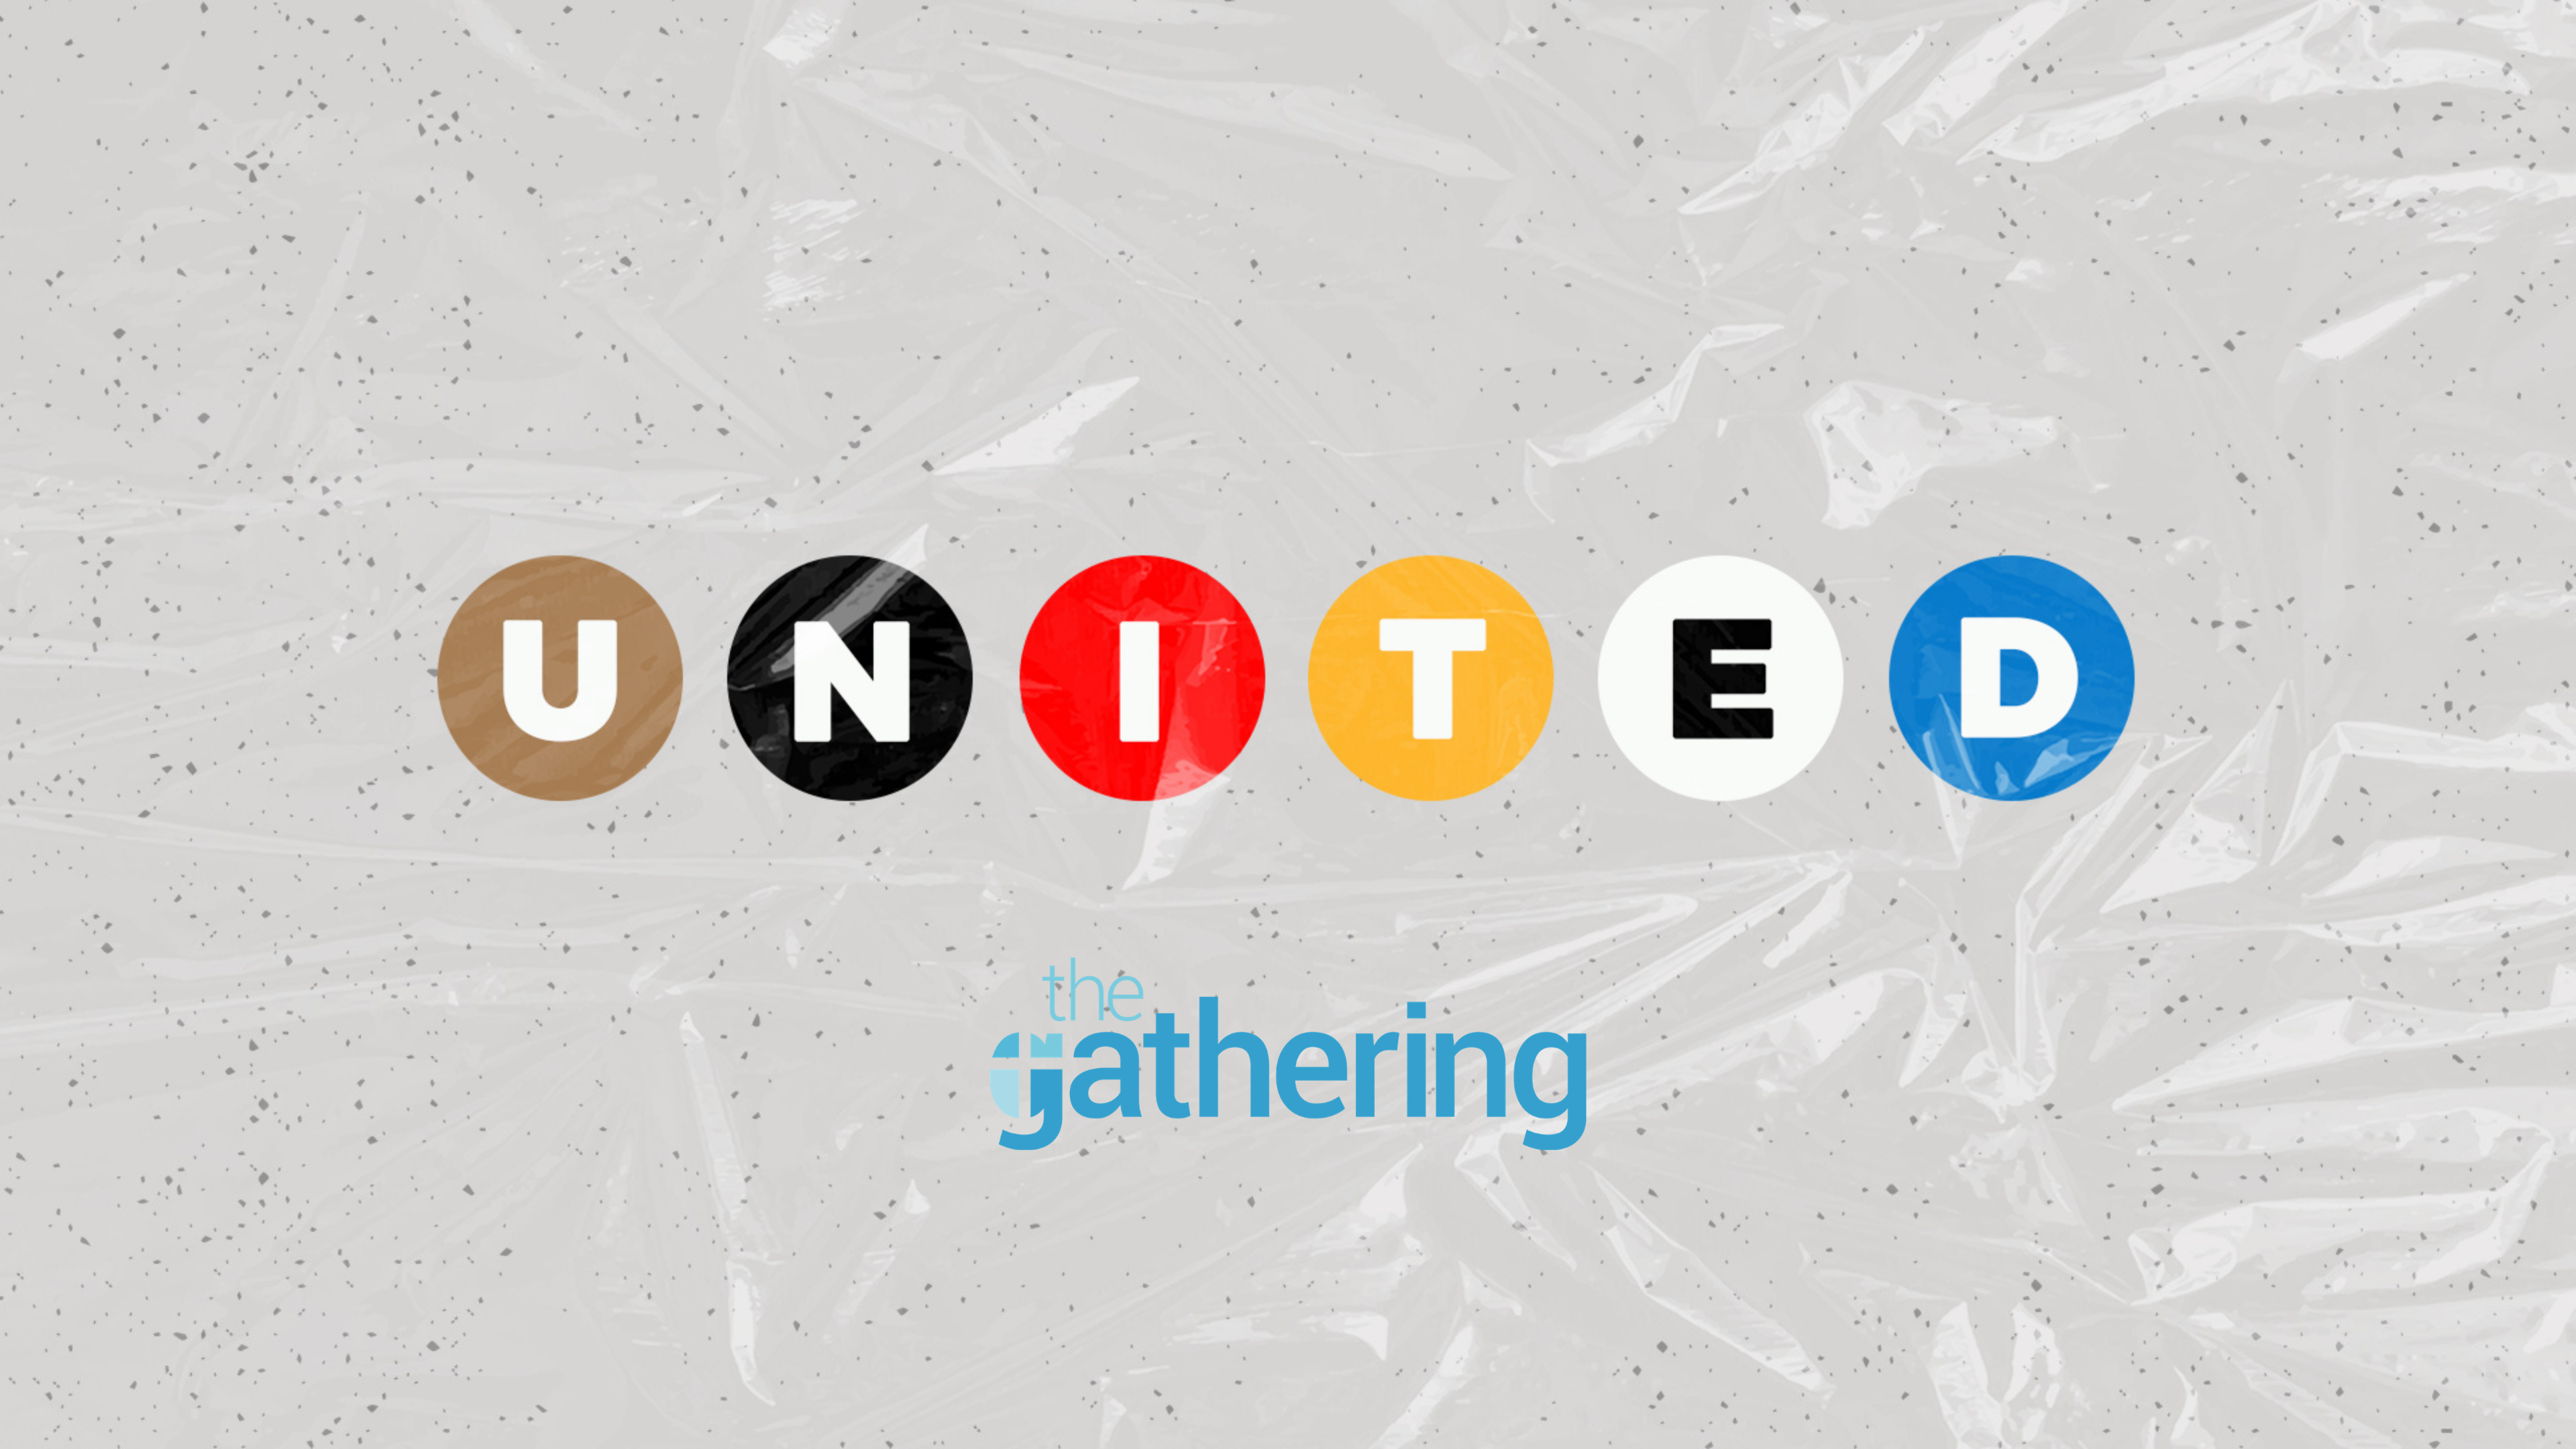 UNITED: Characteristics That Unite, Love